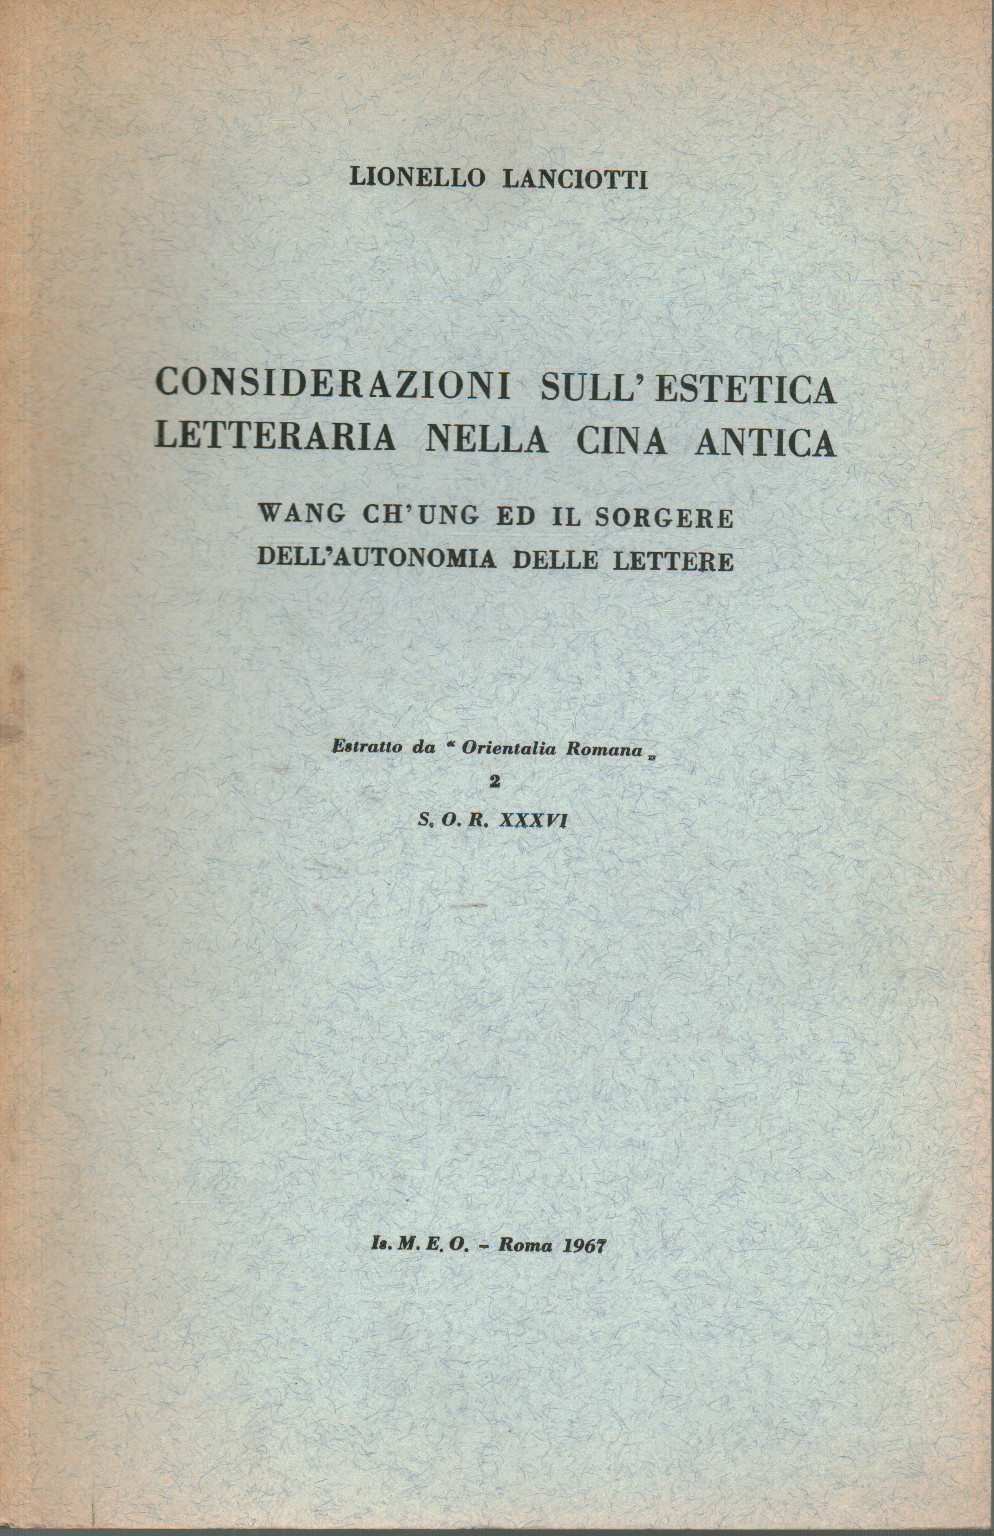 Considerations on literary aesthetics in Cin, Lionello Lanciotti